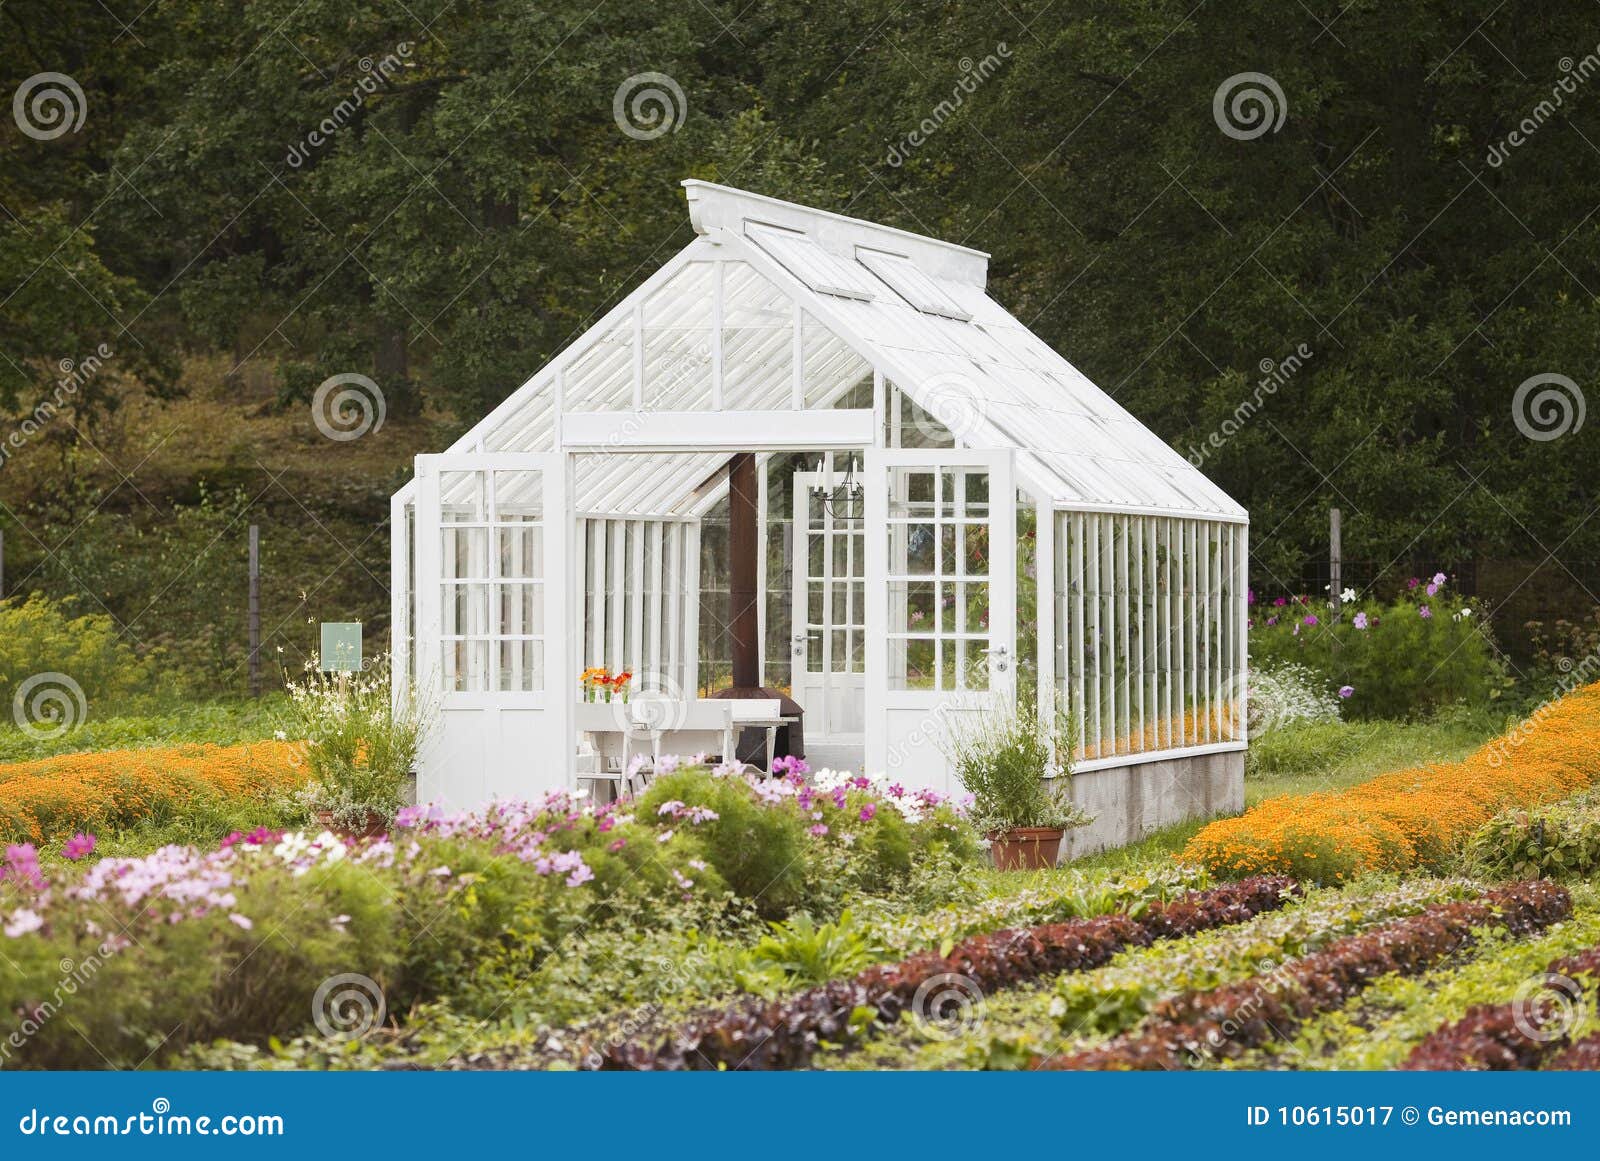 nice greenhouse